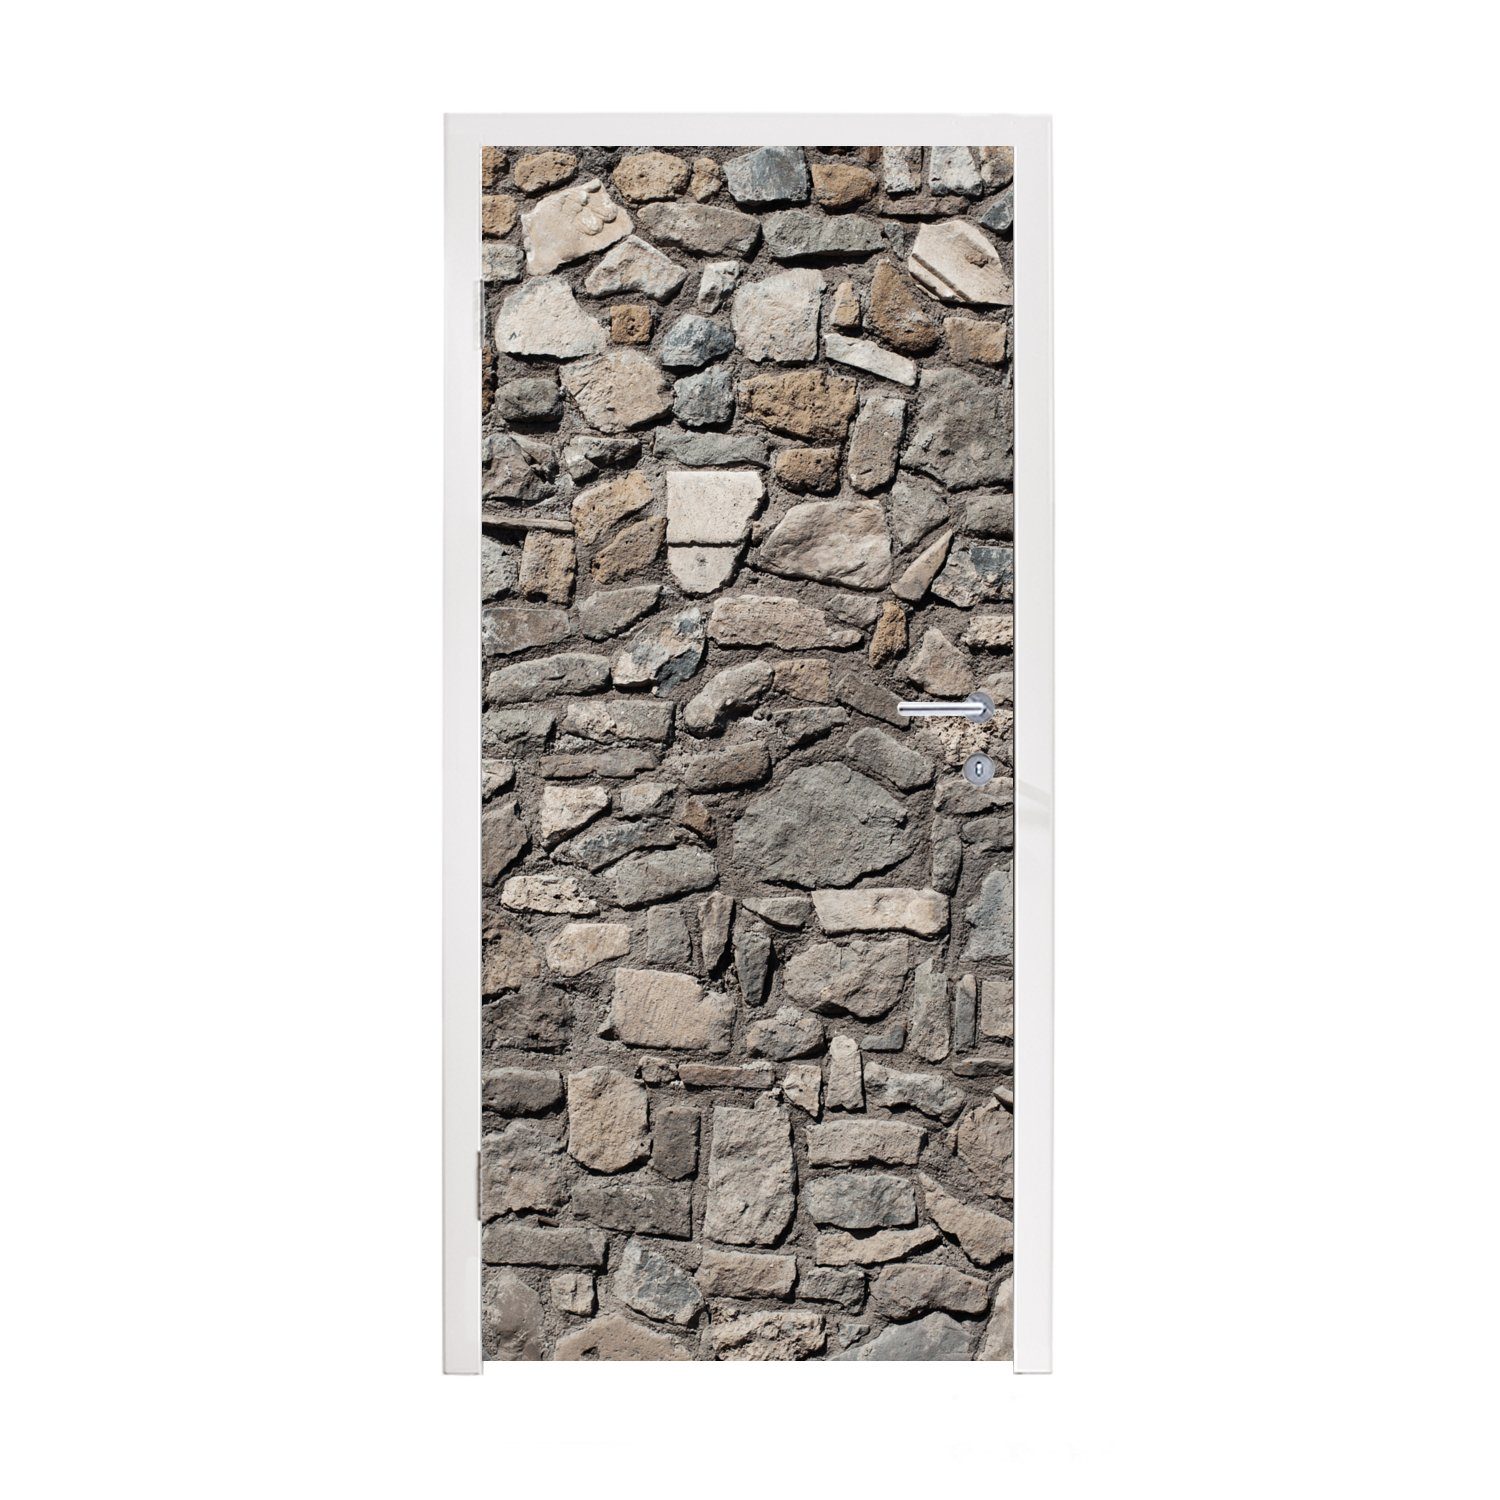 MuchoWow Türtapete Felsbrocken - Alt - Mauer, Matt, bedruckt, (1 St), Fototapete für Tür, Türaufkleber, 75x205 cm